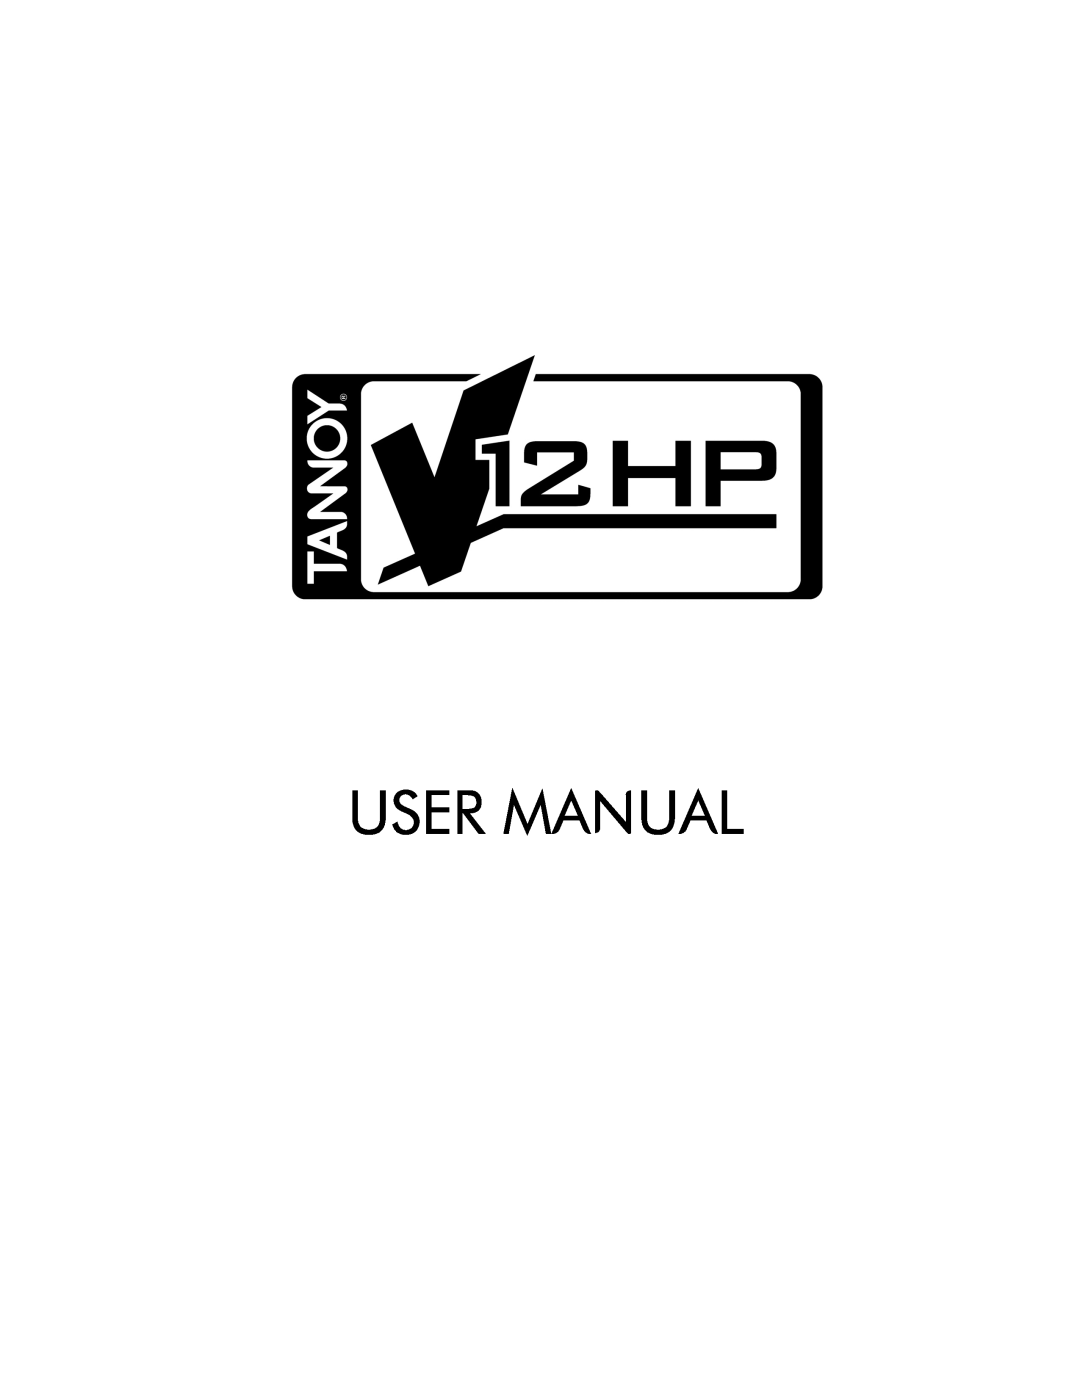 Tannoy V12 HP user manual 